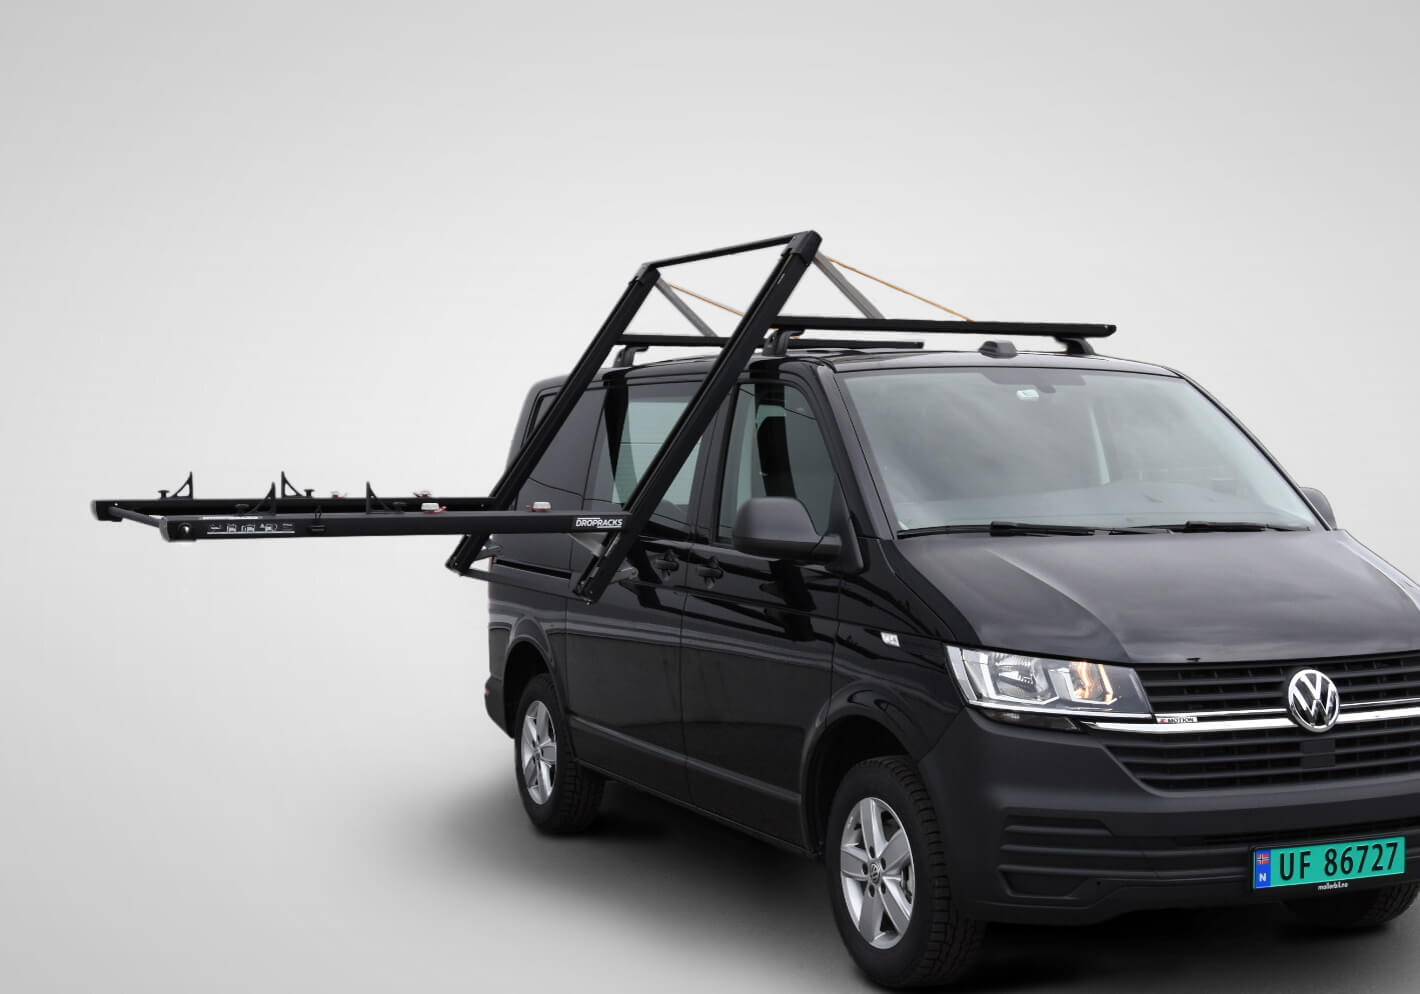 Volkswagen VW T6 Kombi / Multivan / Shuttle / Window van (2015 onwards):Dropracks XL roof loading system (vehicle roof connectors at extra cost)